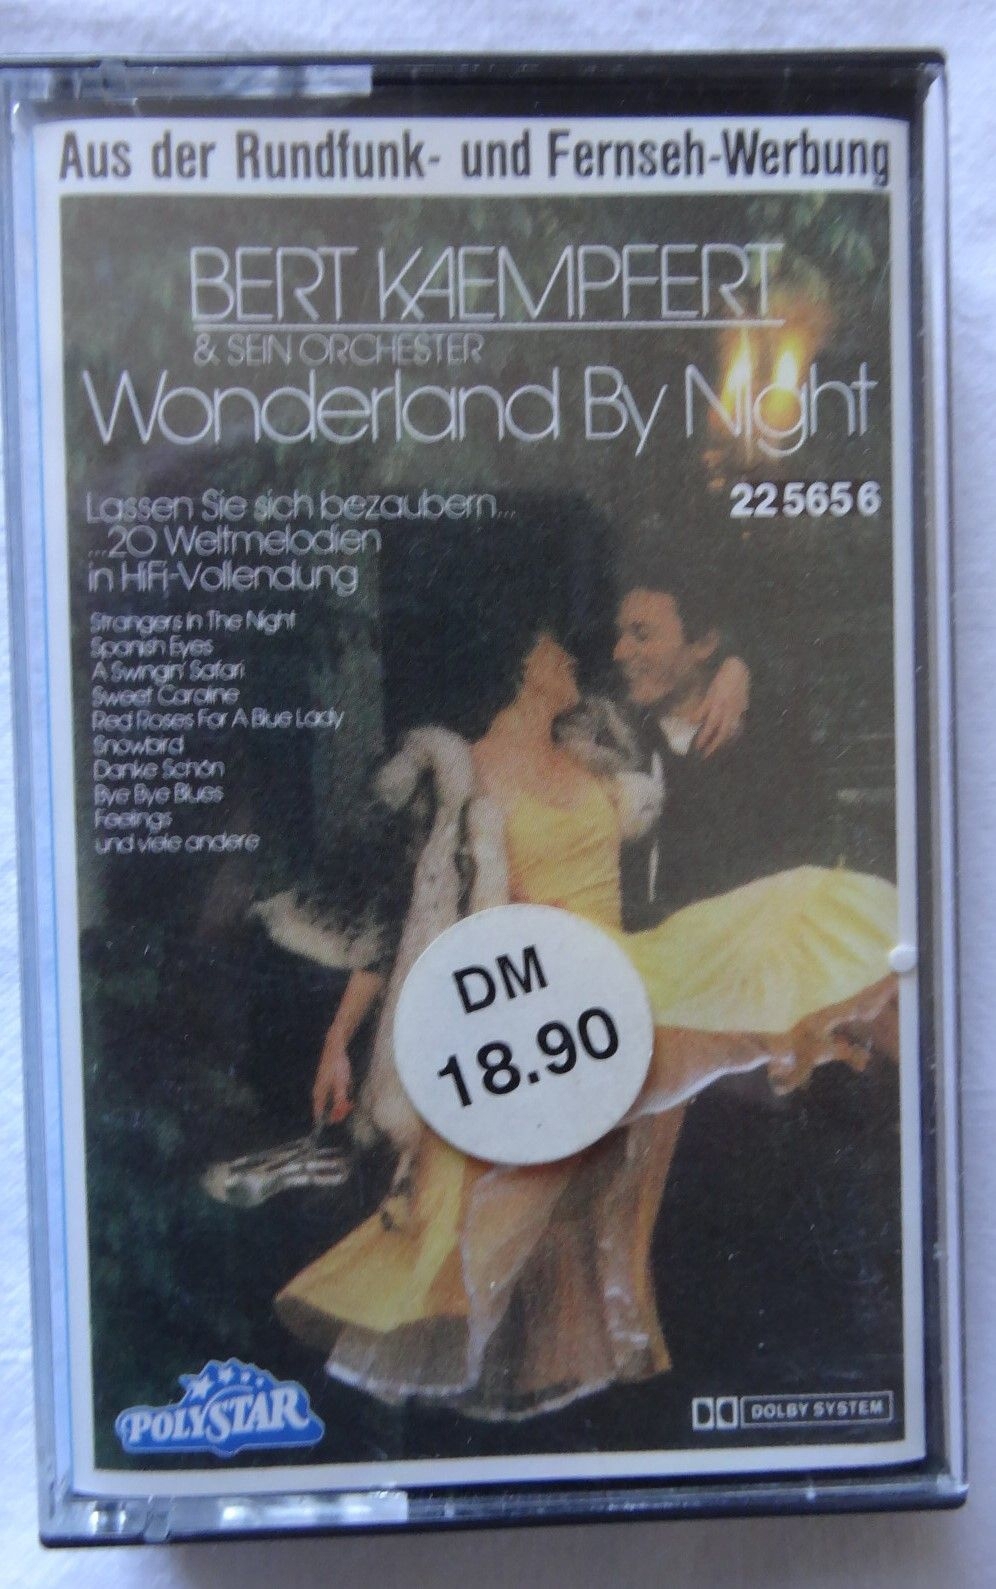 MC Bert Kaempert &sein Orchester Wonderland by Night 20 Melodien Polystar 225656 1978 Musikkassette